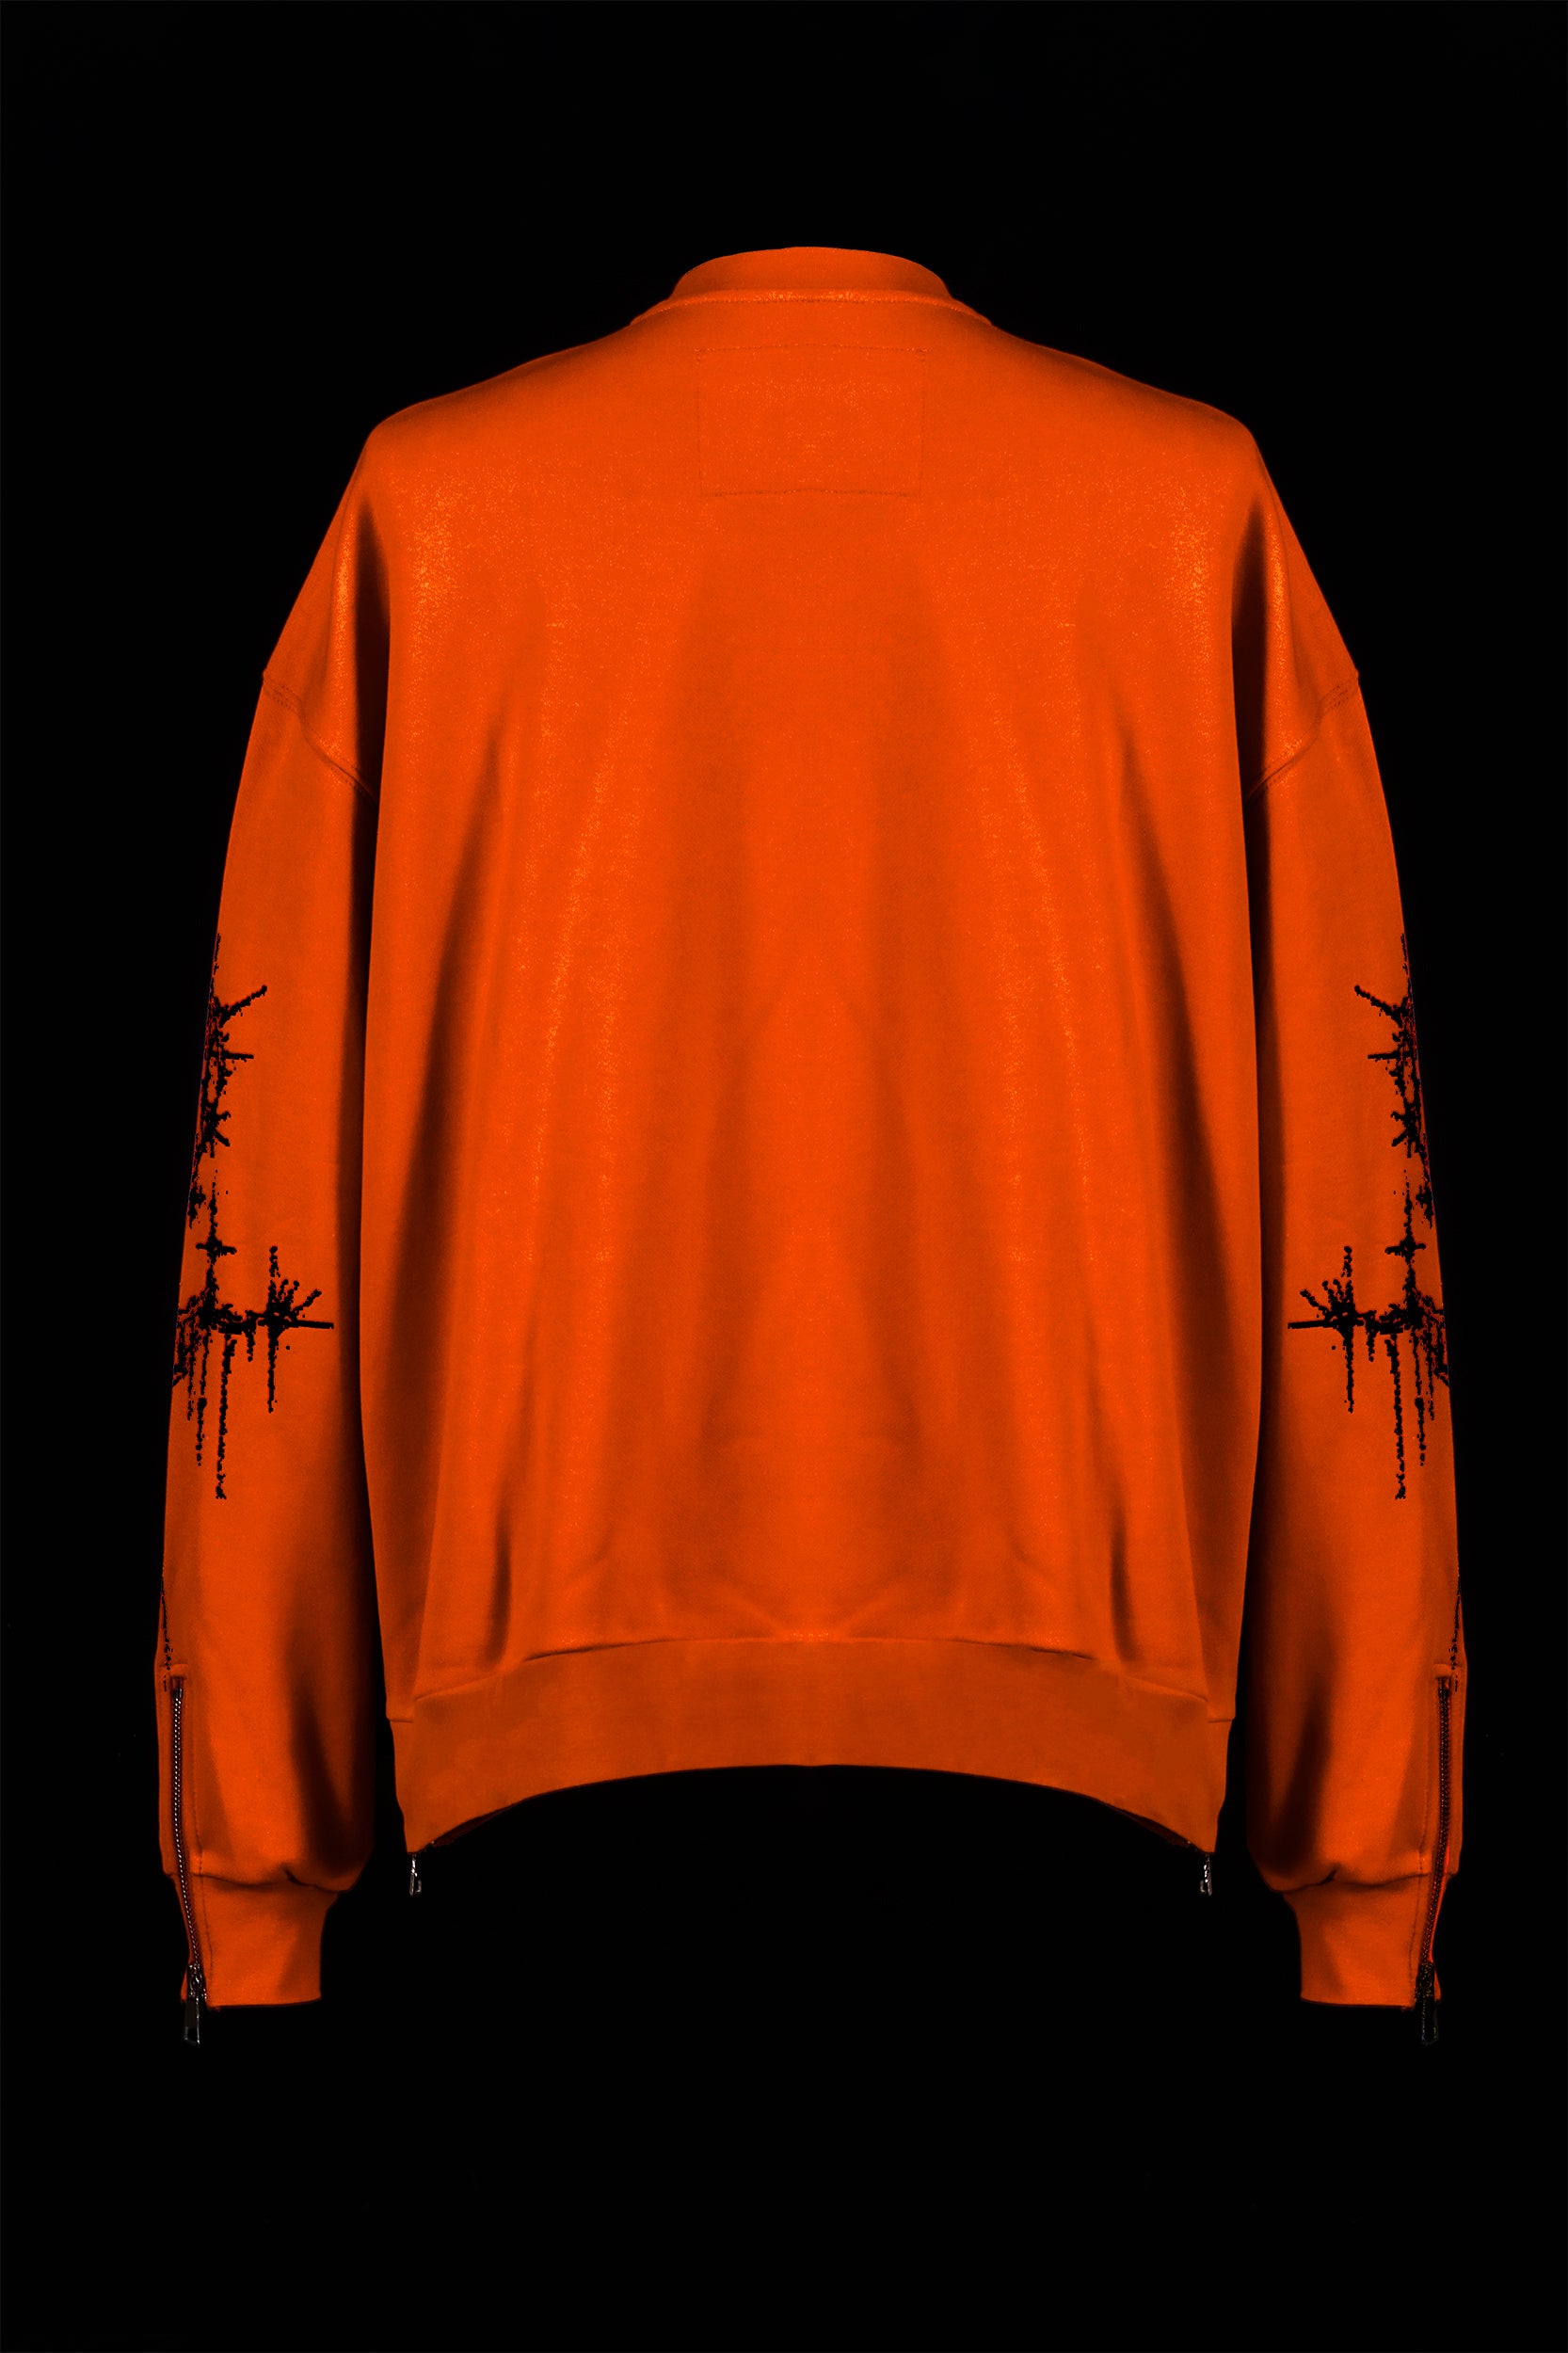 The Cyber Sigilism Orange Cotton Sweatshirt